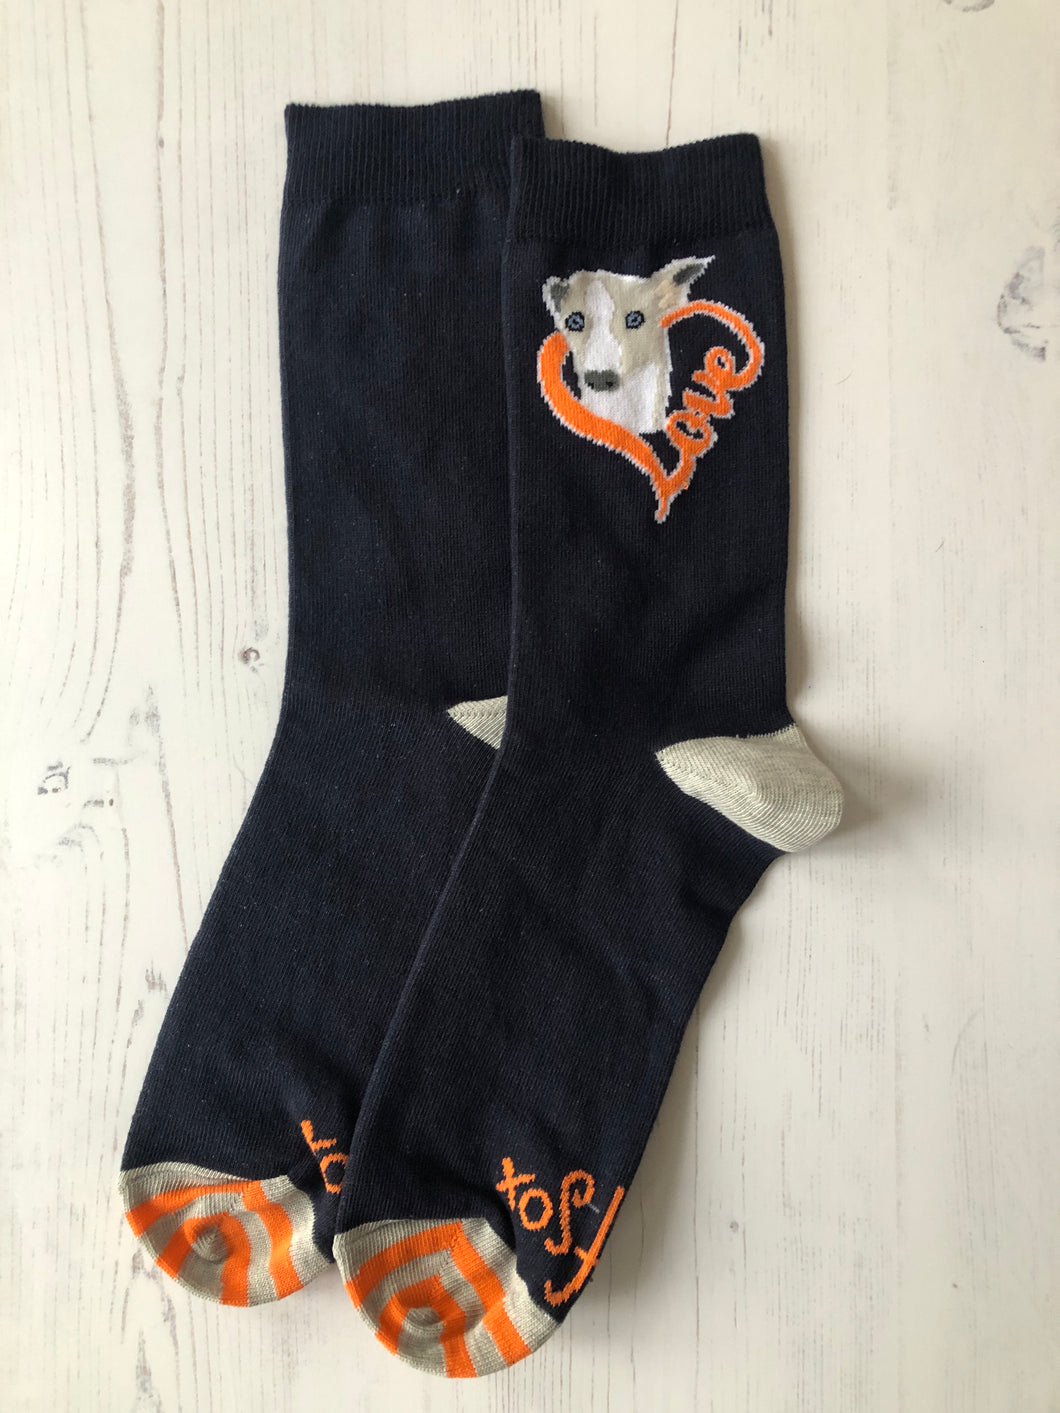 Italian Greyhound/Whippet Socks for Greyhound Gap